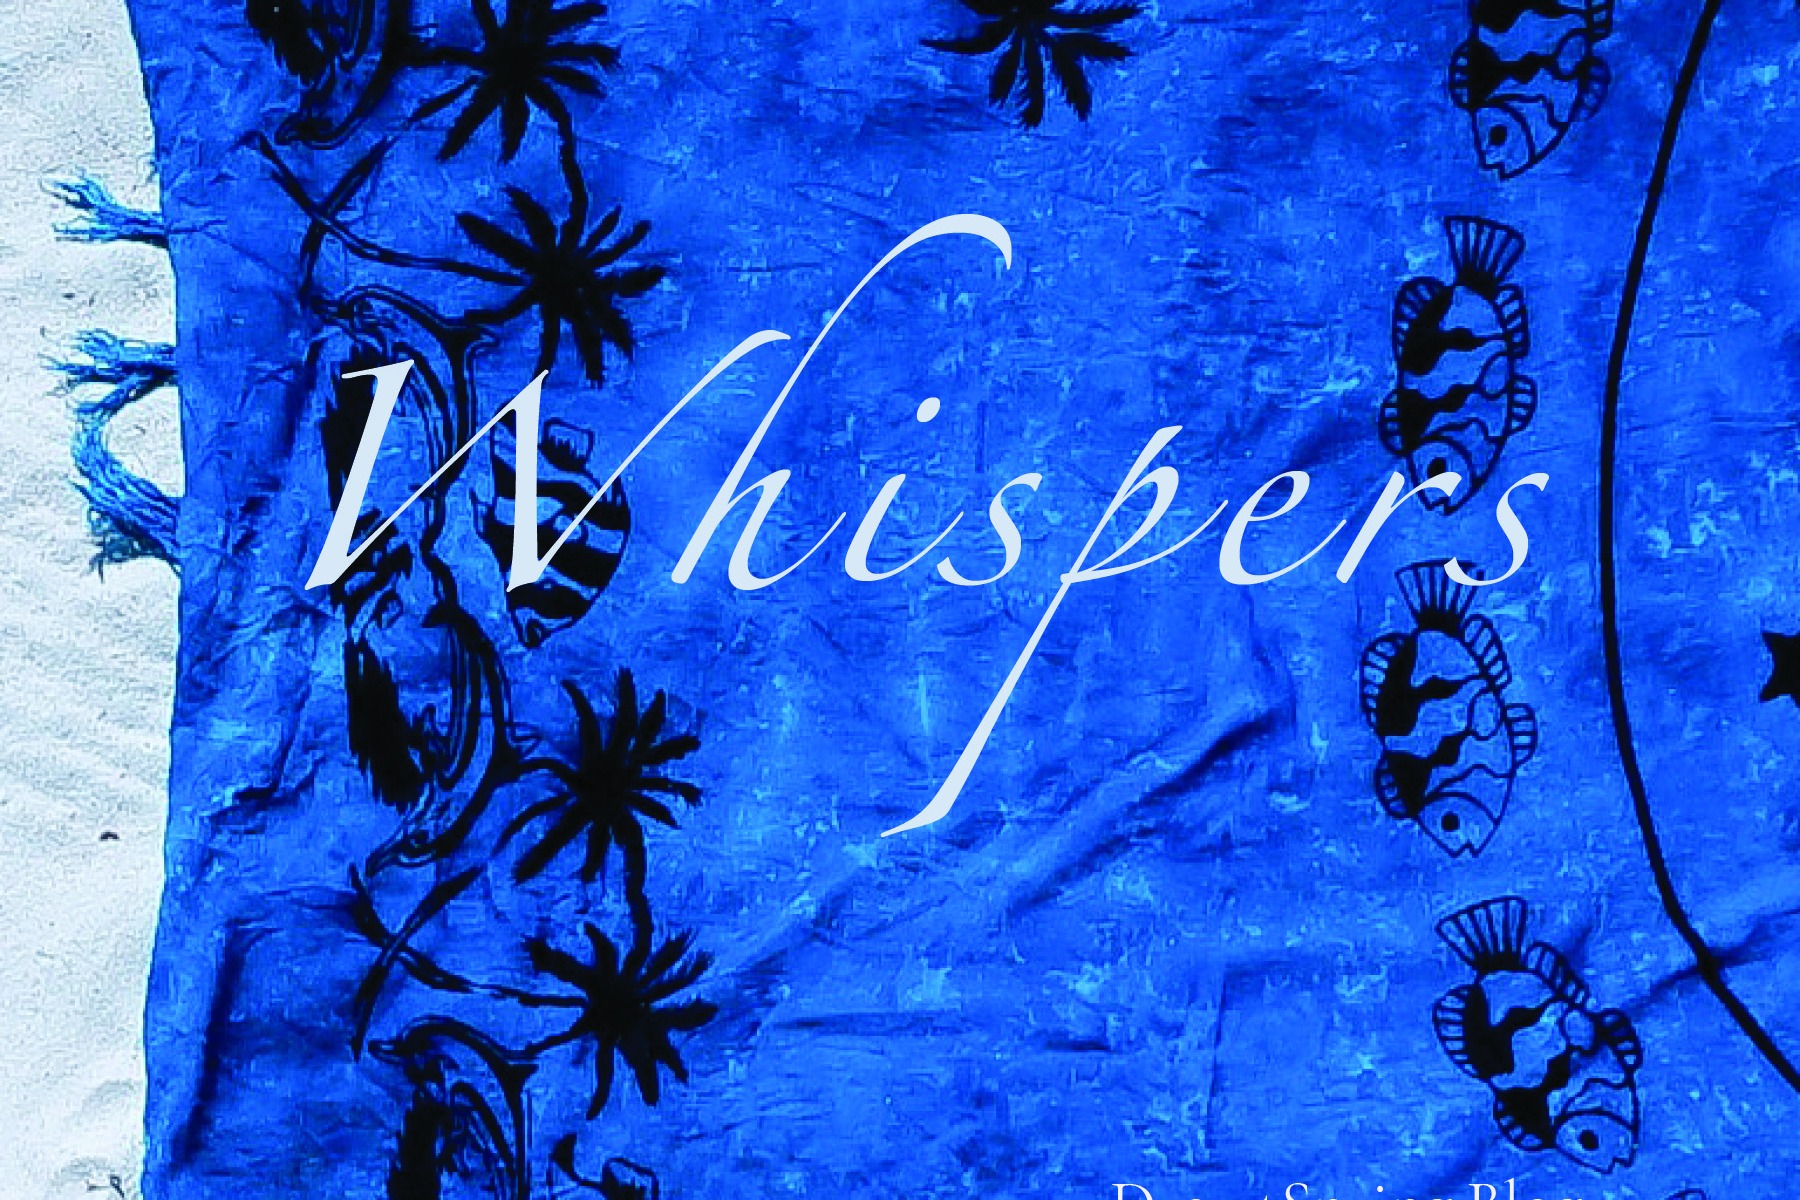 Whispers a blog post written by Janet Lenz